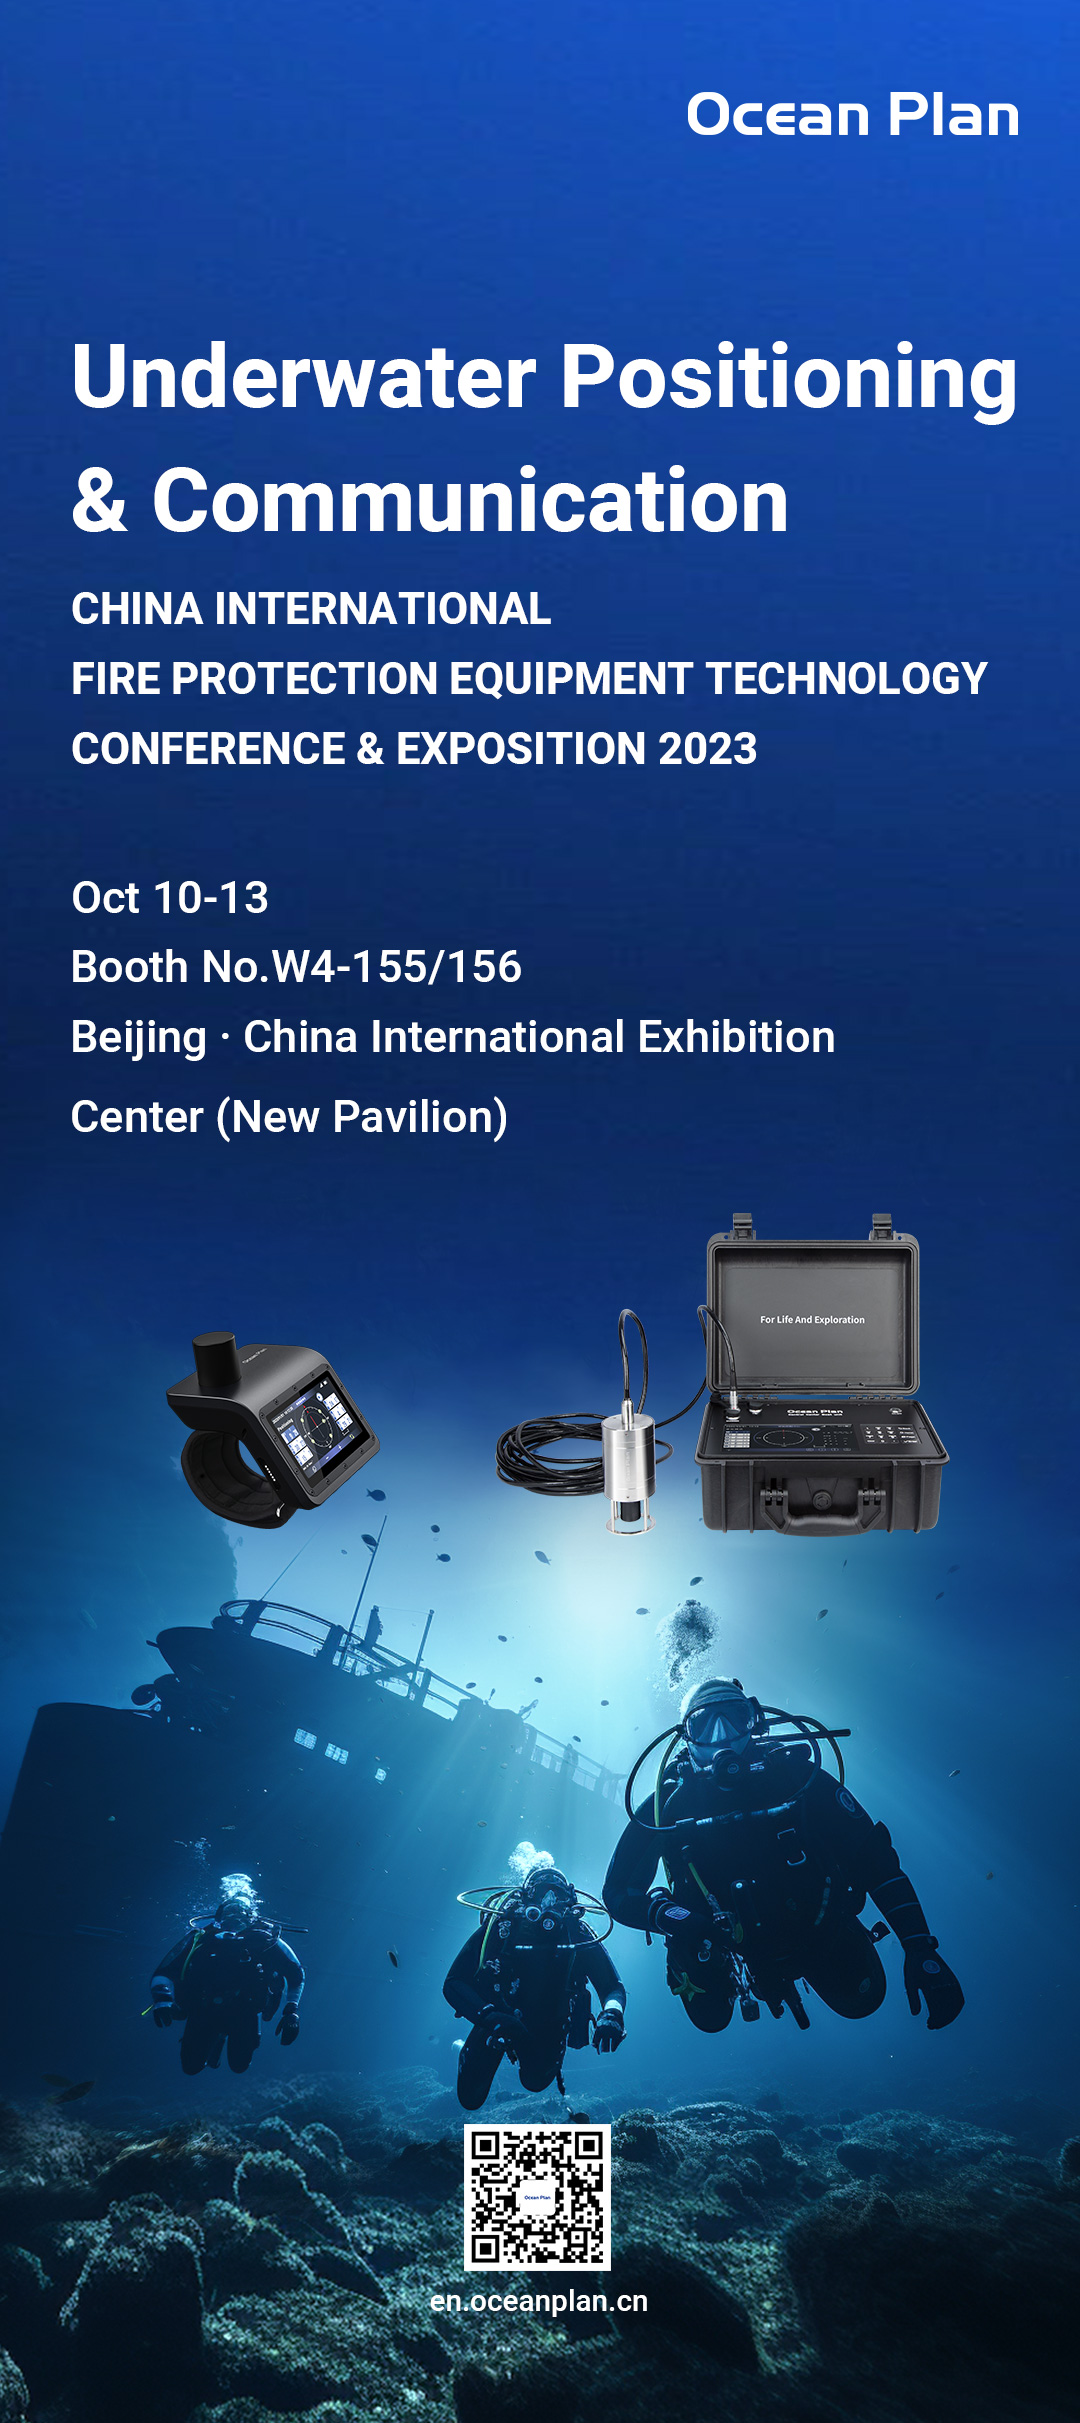 China Fire Expo 2023 - Ocean Plan exhibition invitation 